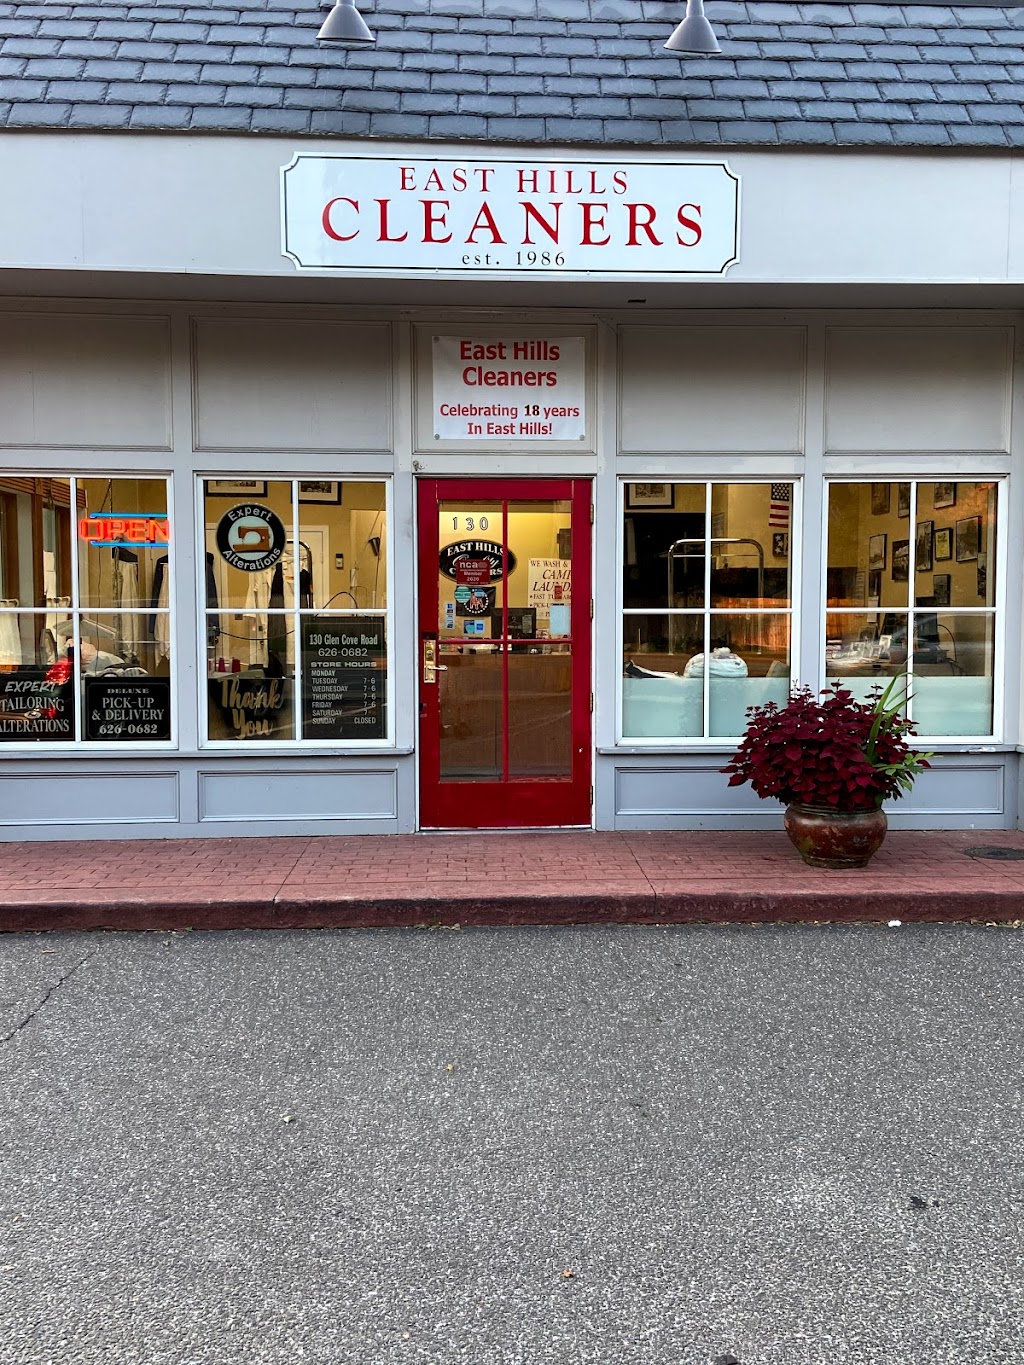 East Hills Cleaners | 130 Glen Cove Rd, East Hills, NY 11577 | Phone: (516) 626-0682